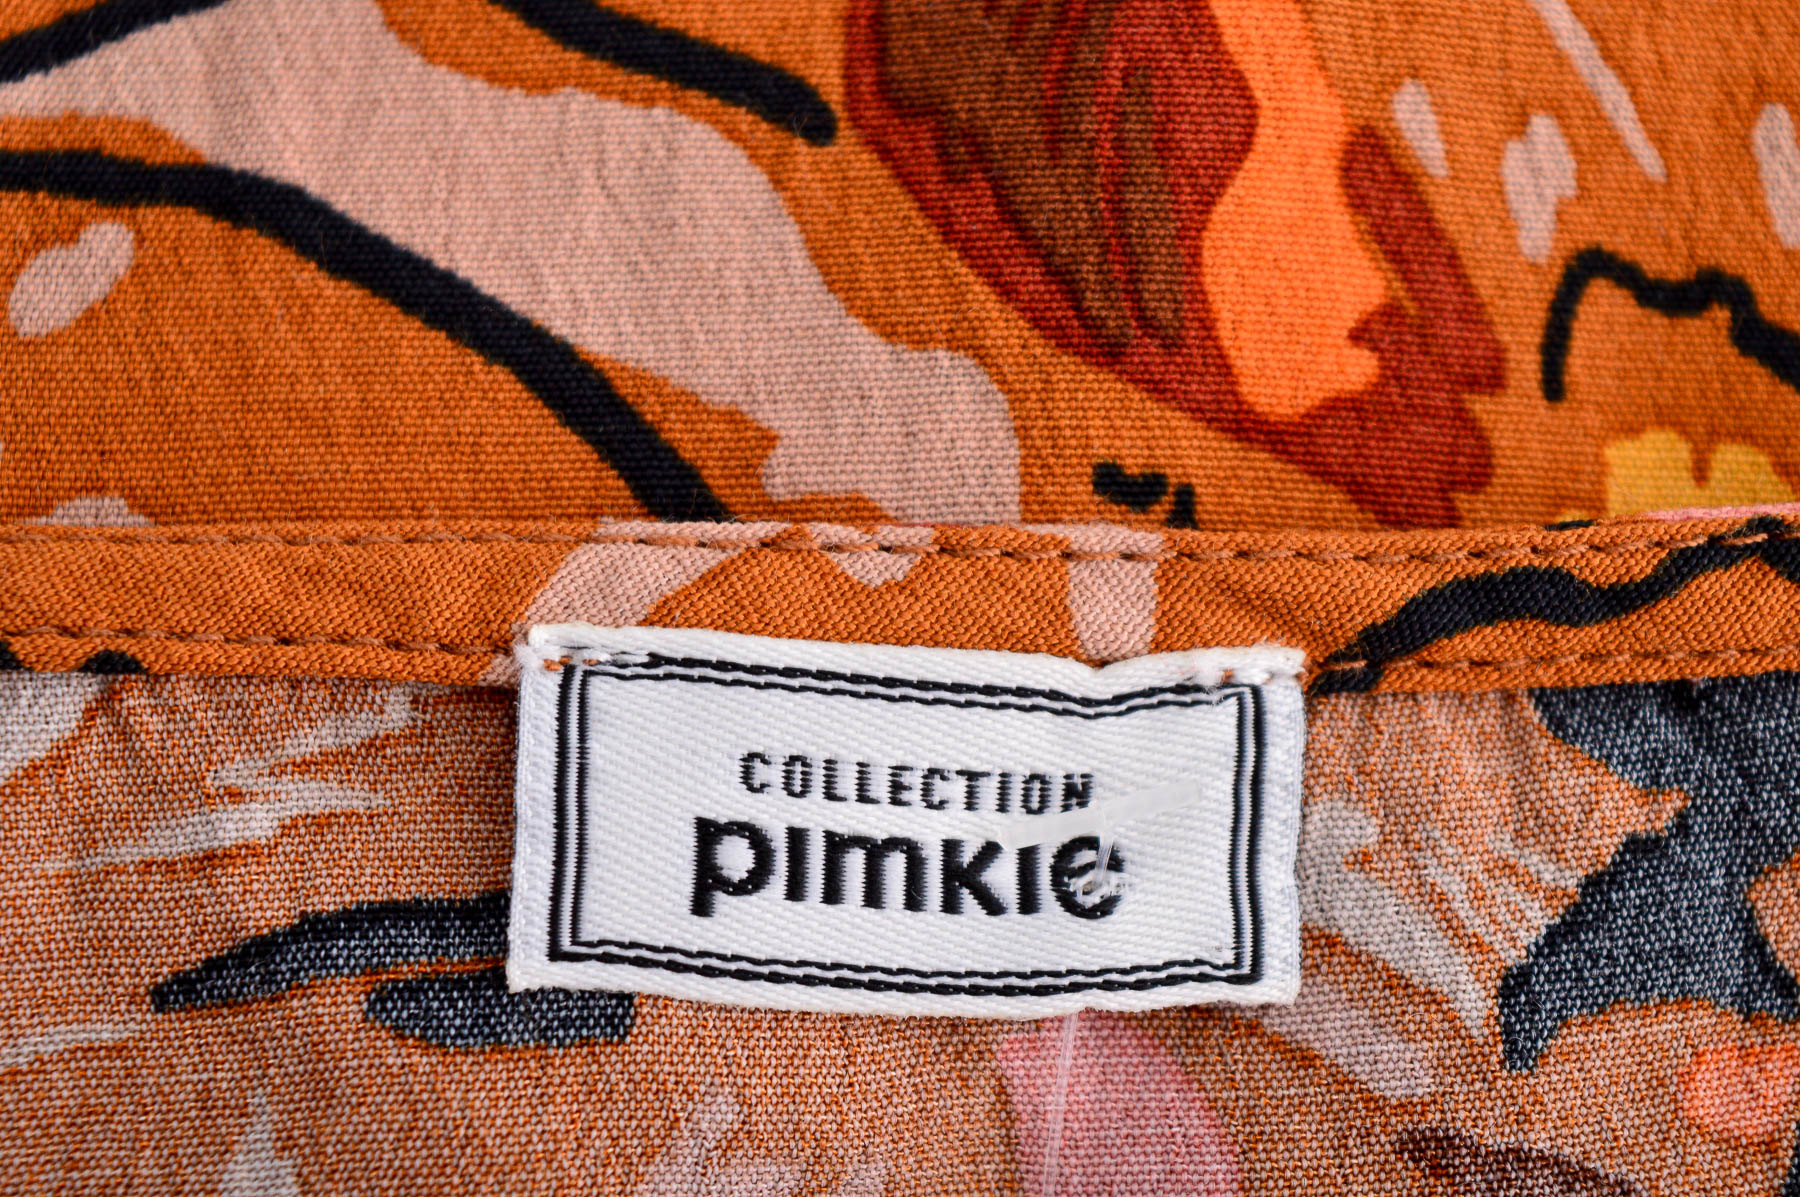 Women's shirt - Pimkie - 2